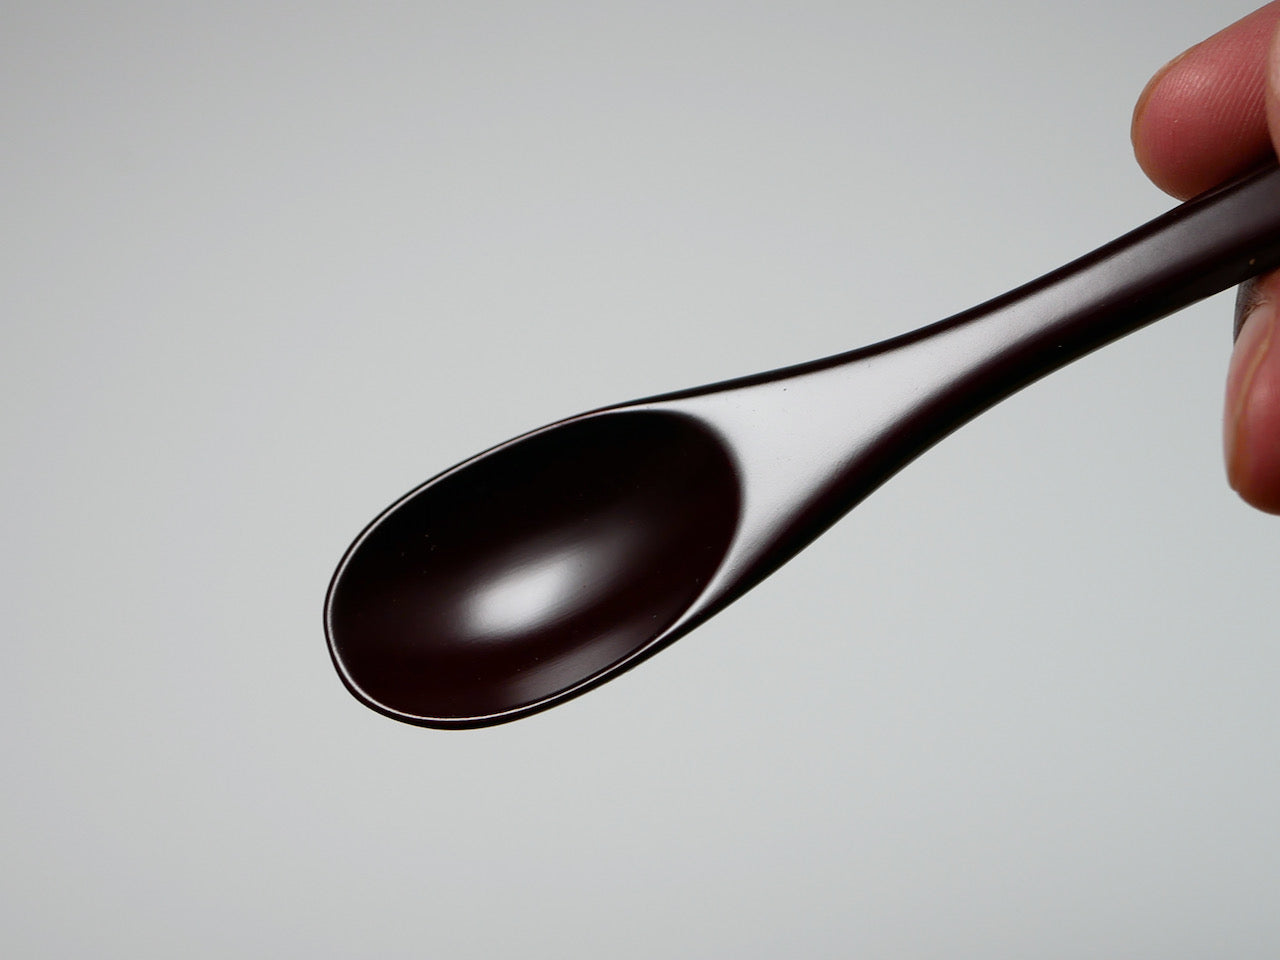 Small Urushi lacquer spoon